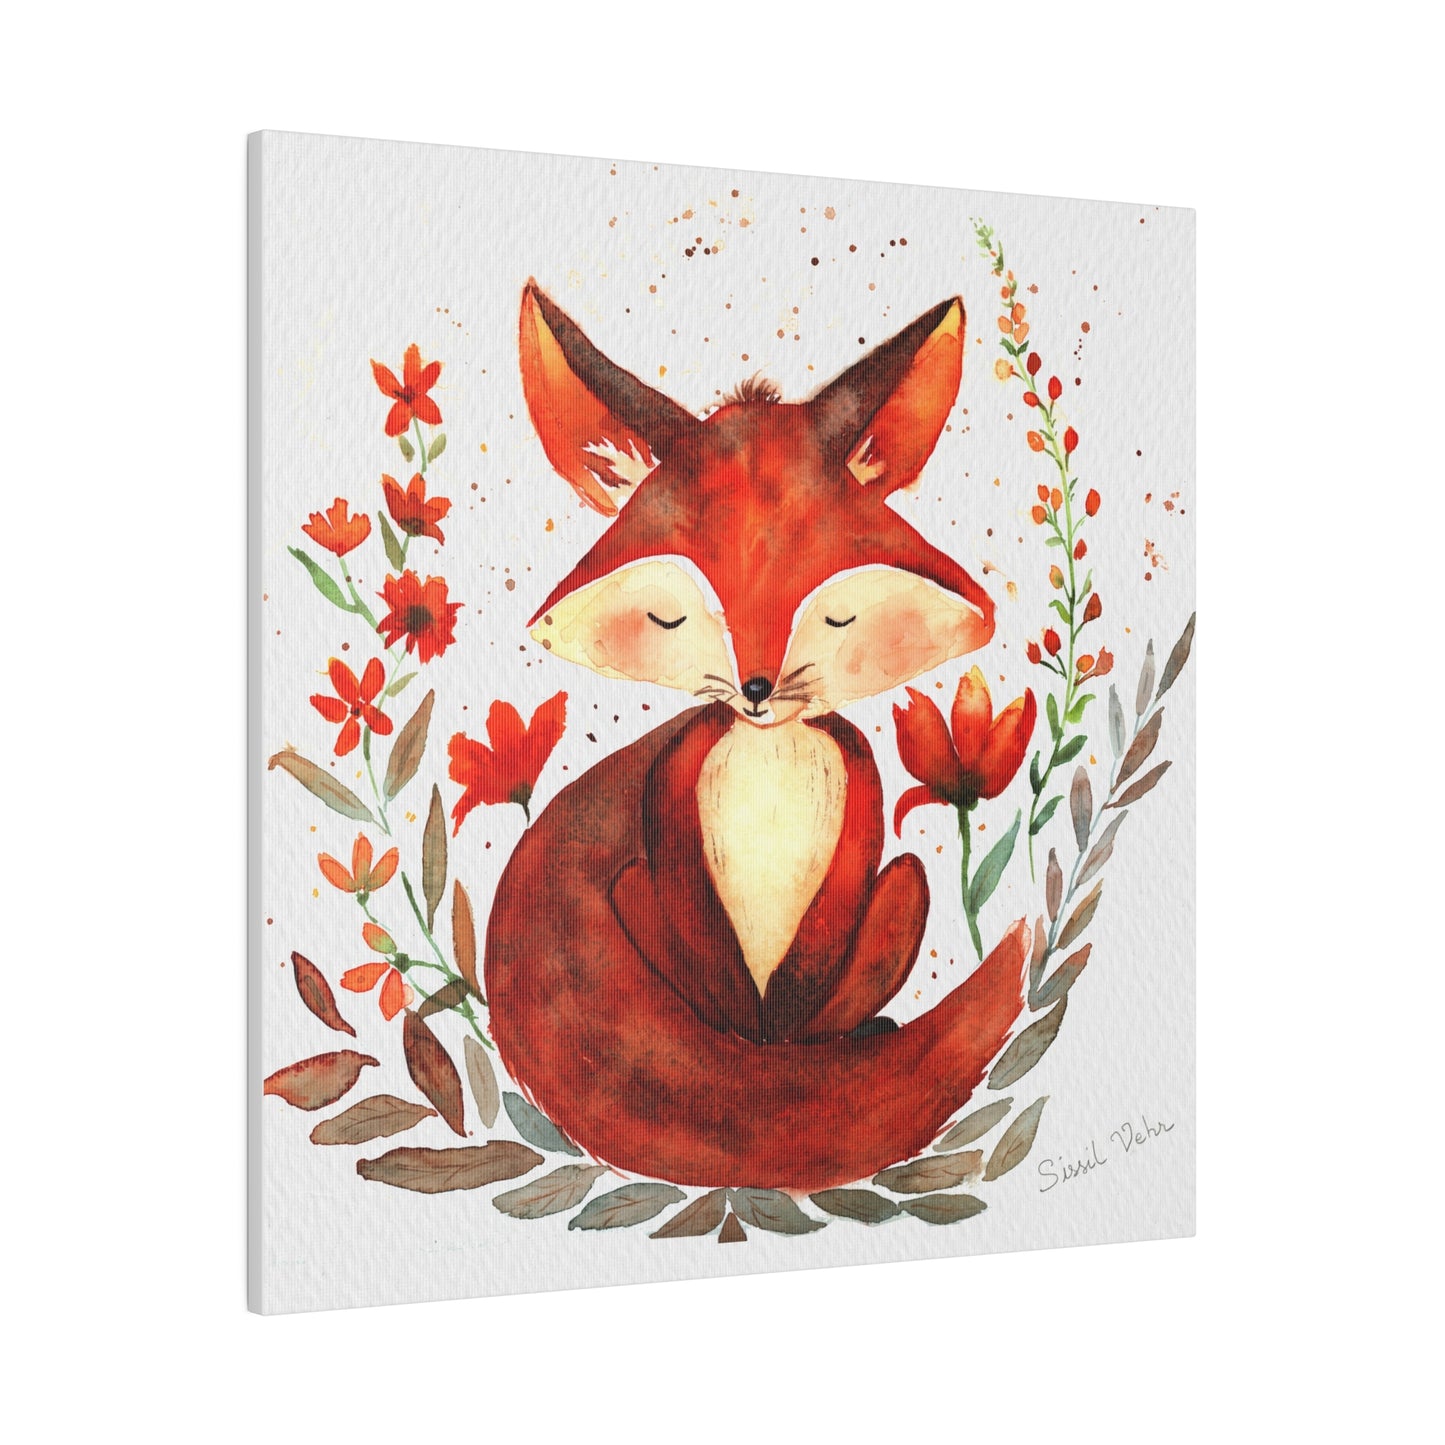 Watercolor wall art: Adorable fox